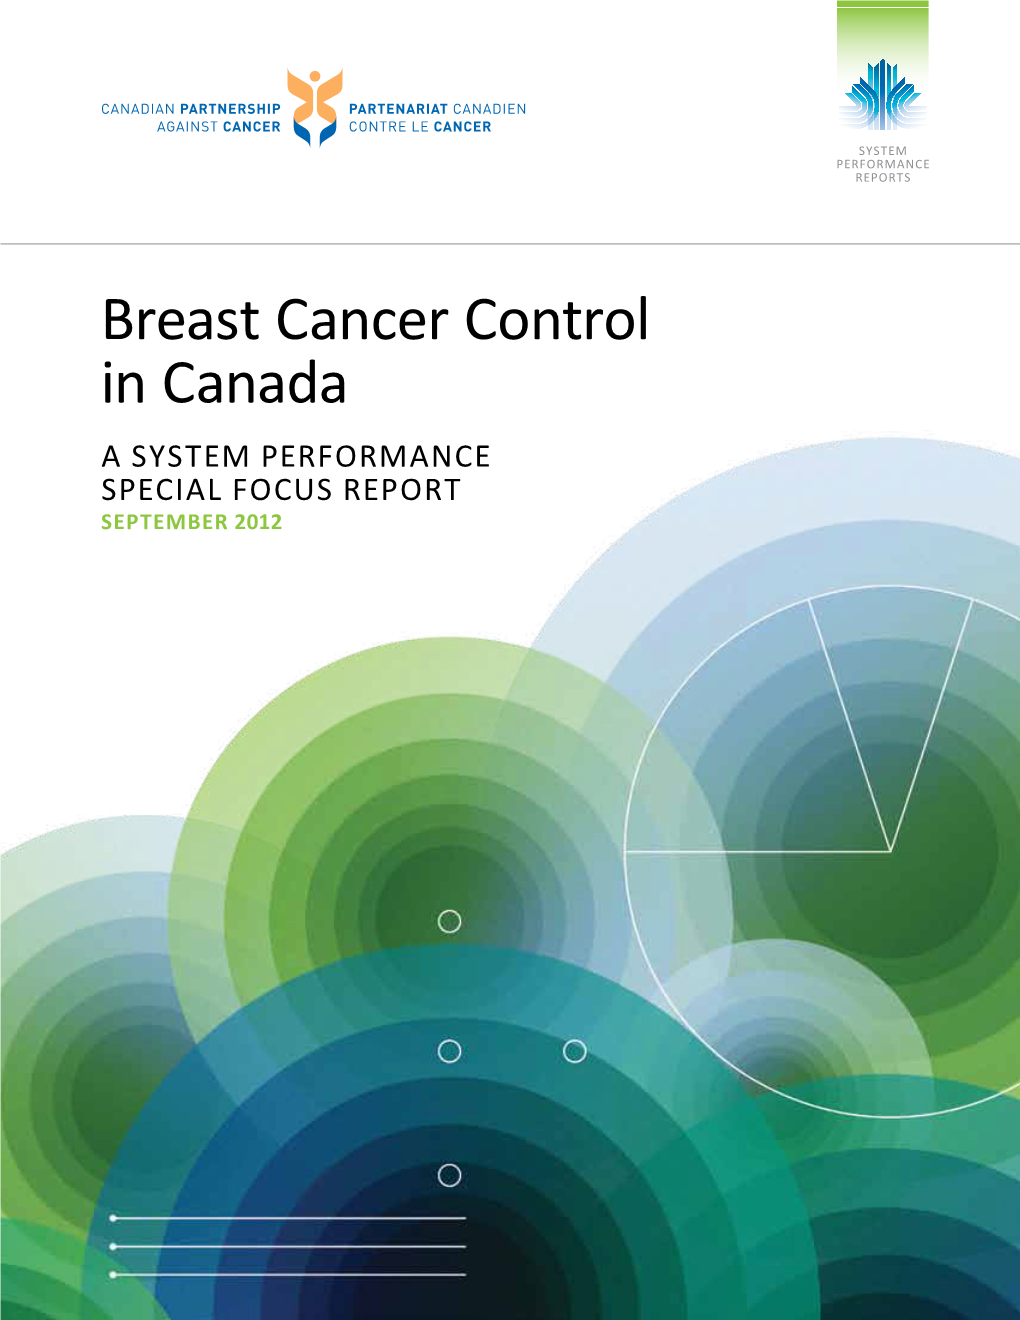 Breast Cancer Control in Canada